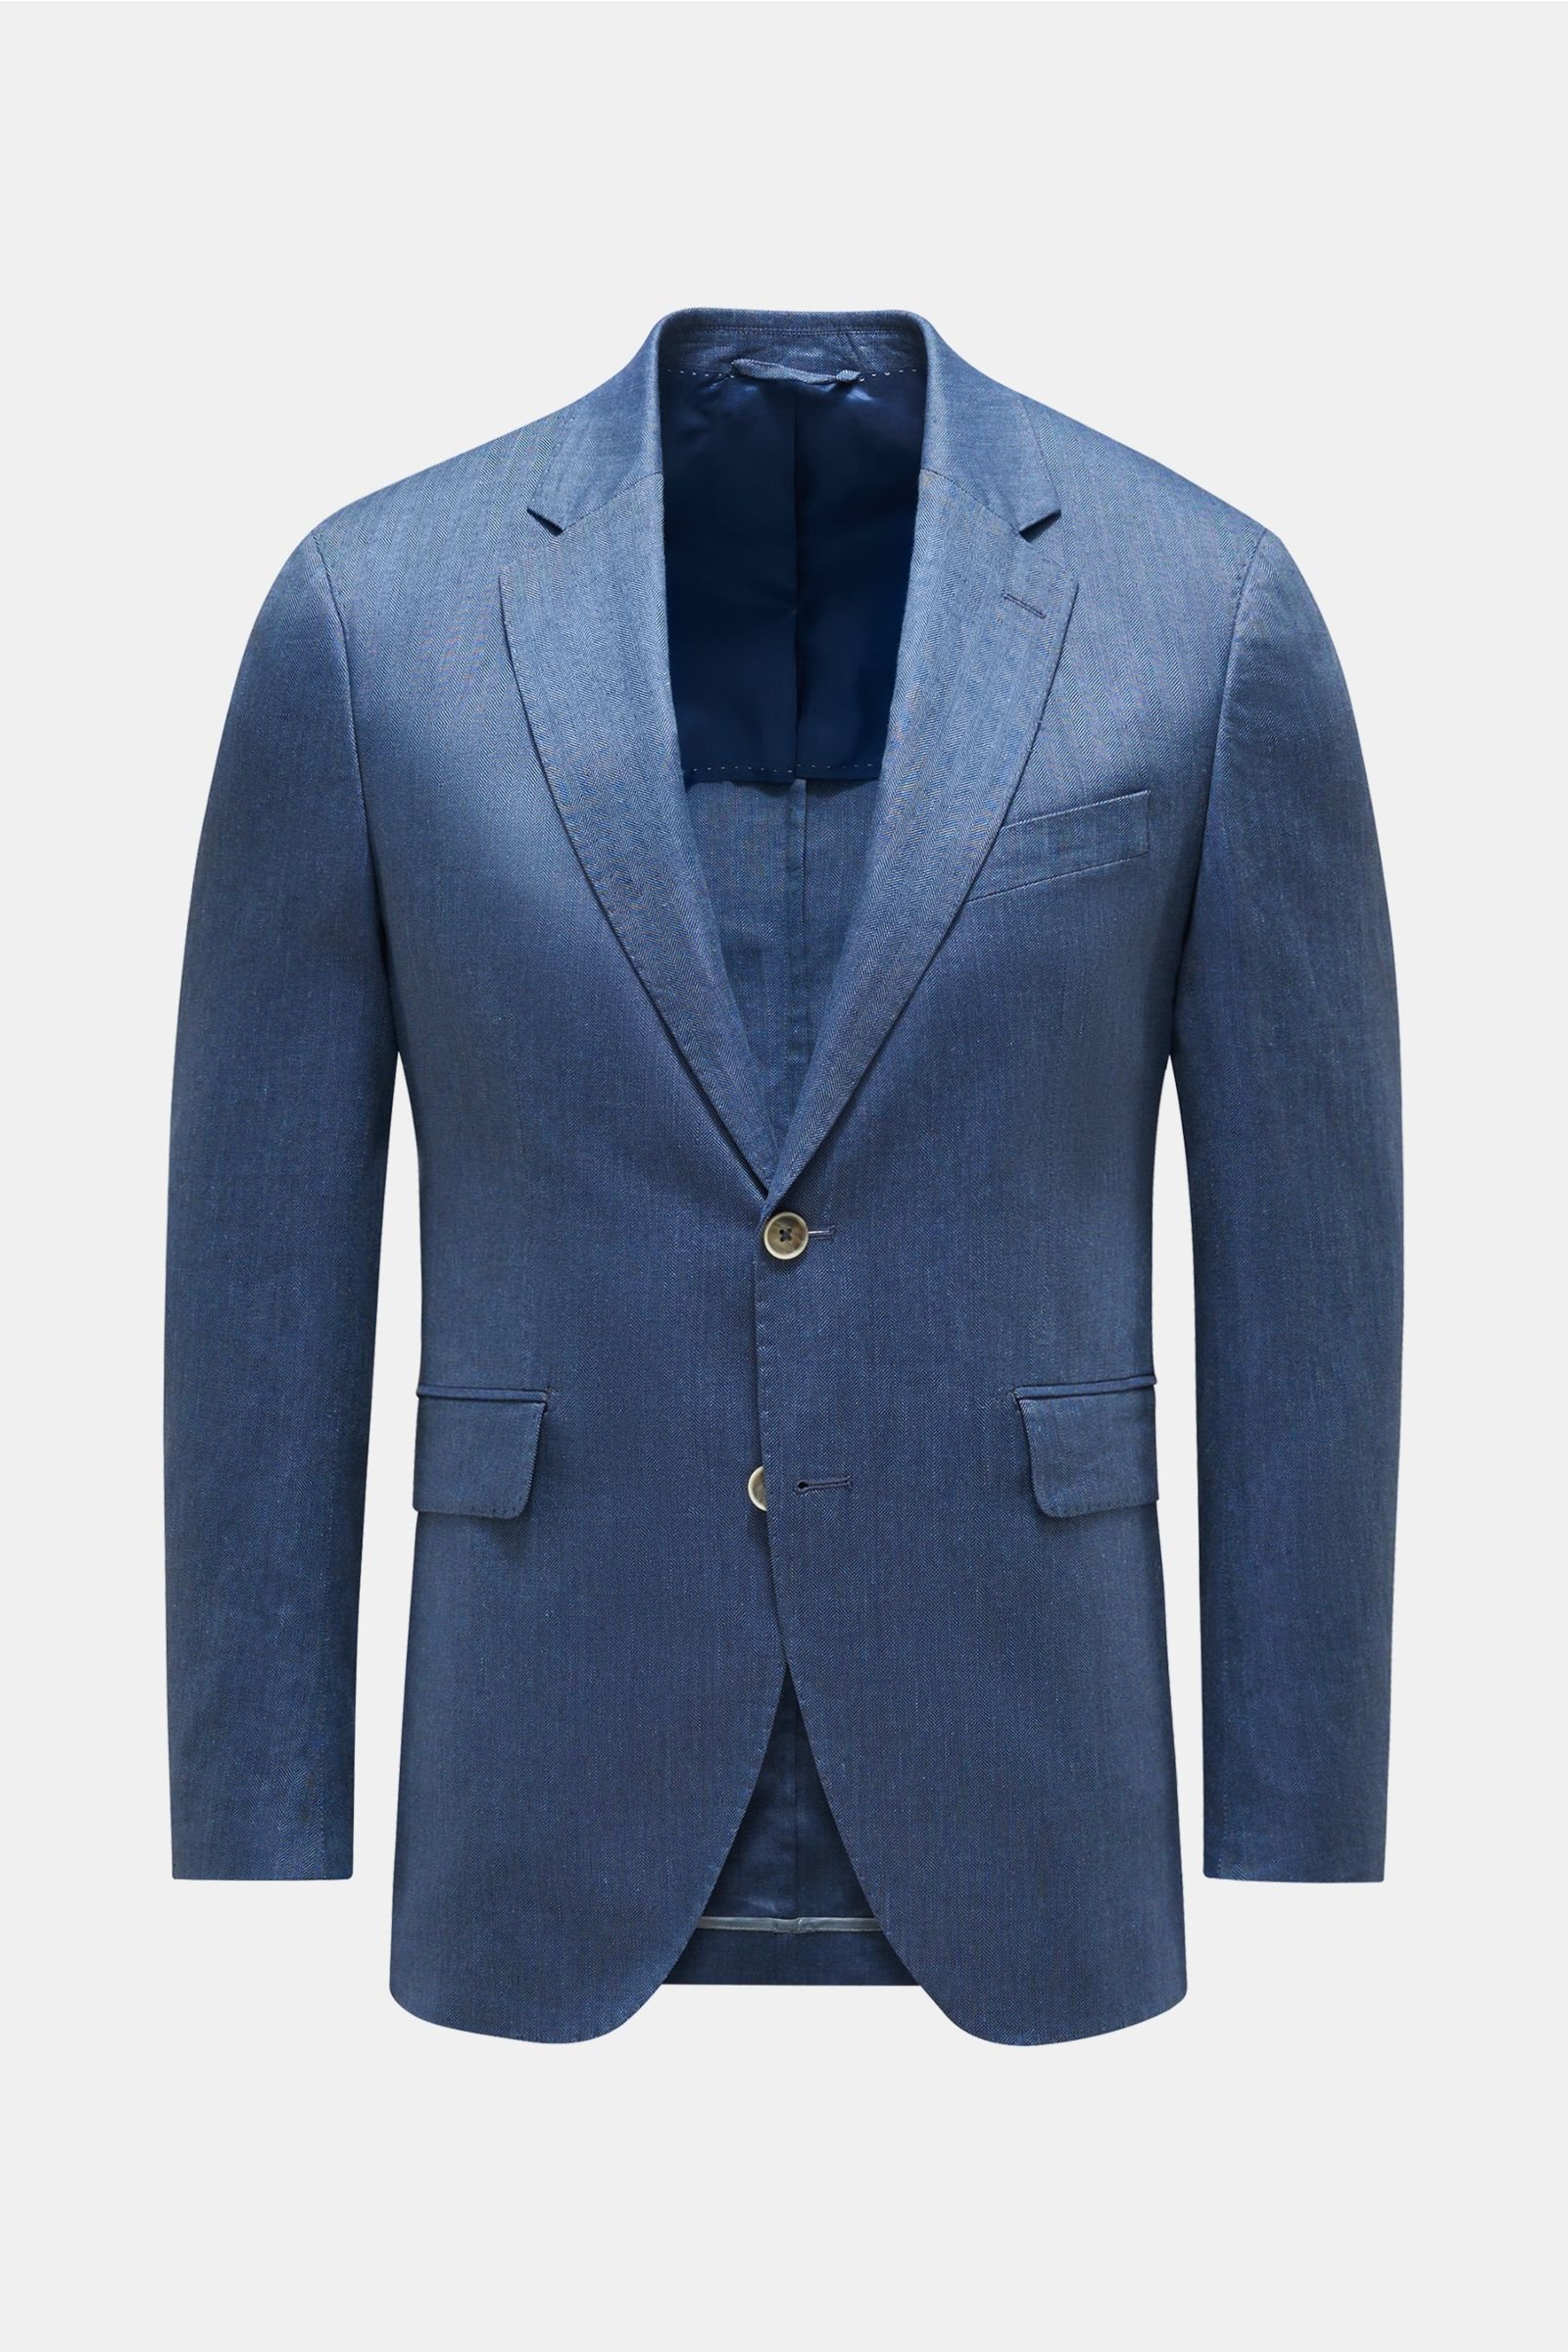 HACKETT LONDON smart-casual jacket smoky blue | BRAUN Hamburg